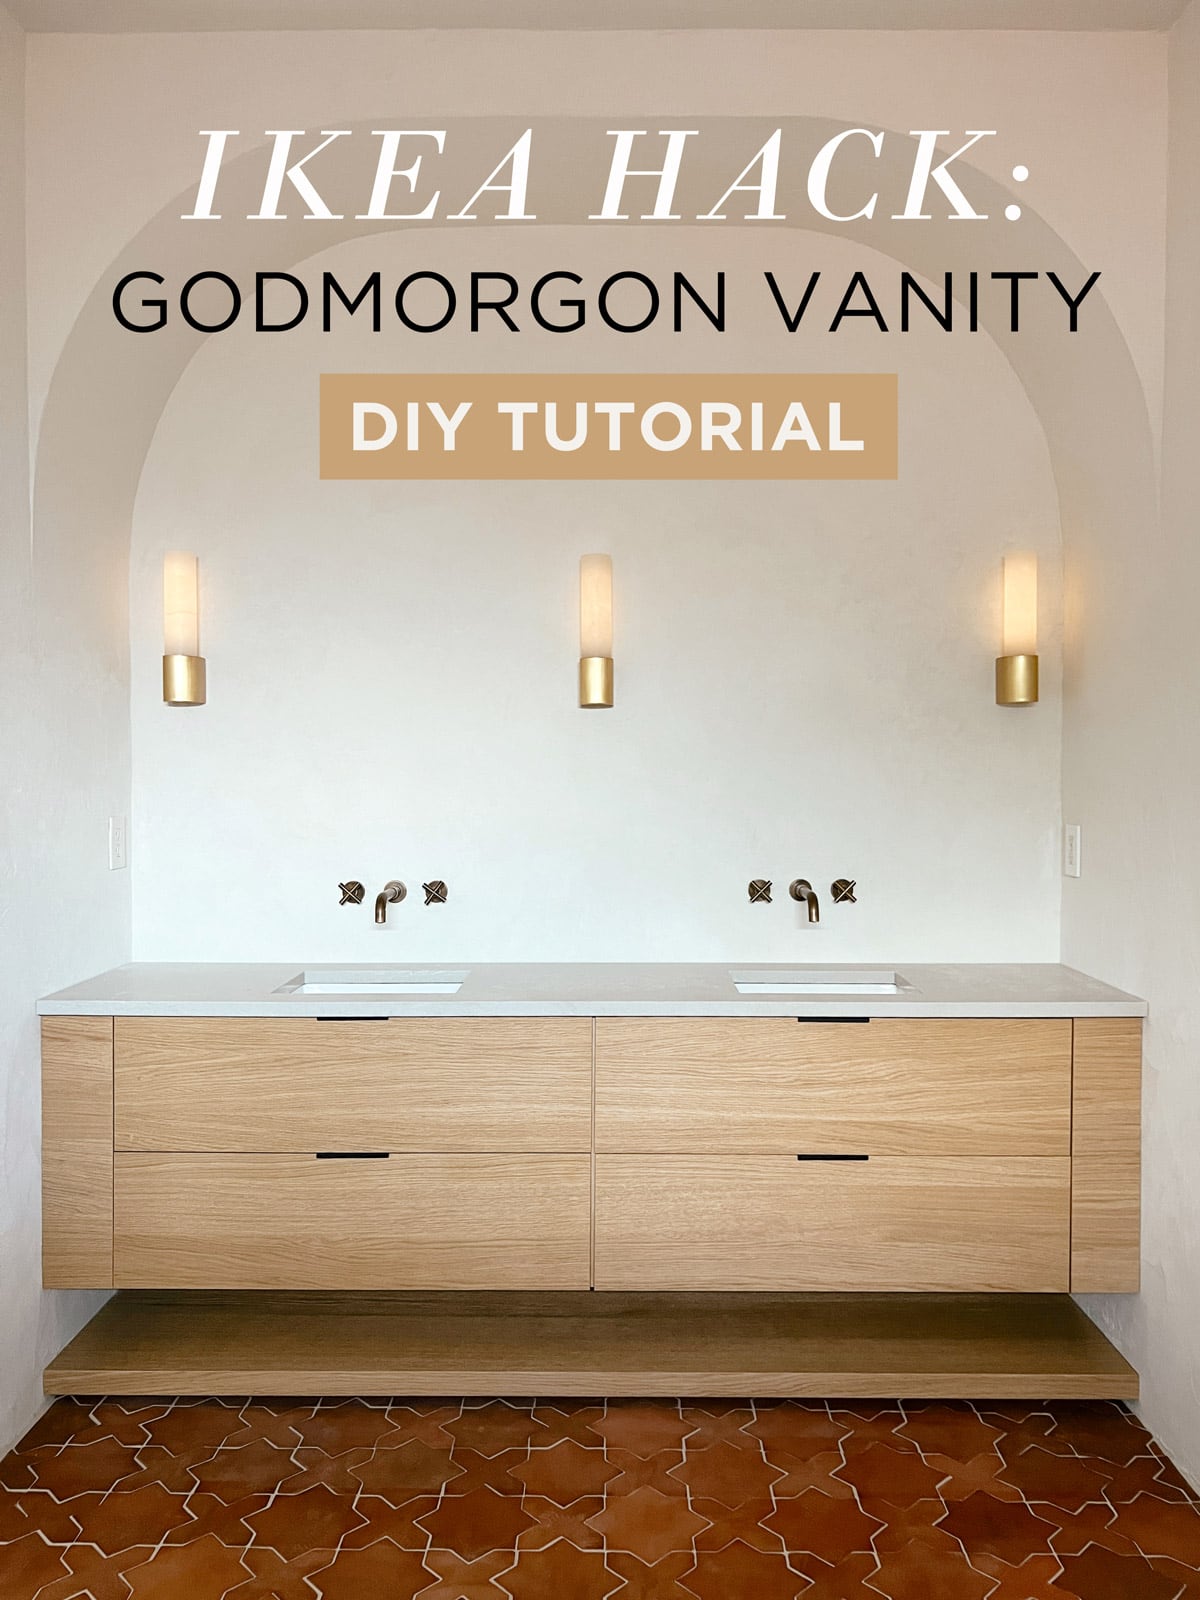 ikea hack custom godmorgon vanity diy tutorial